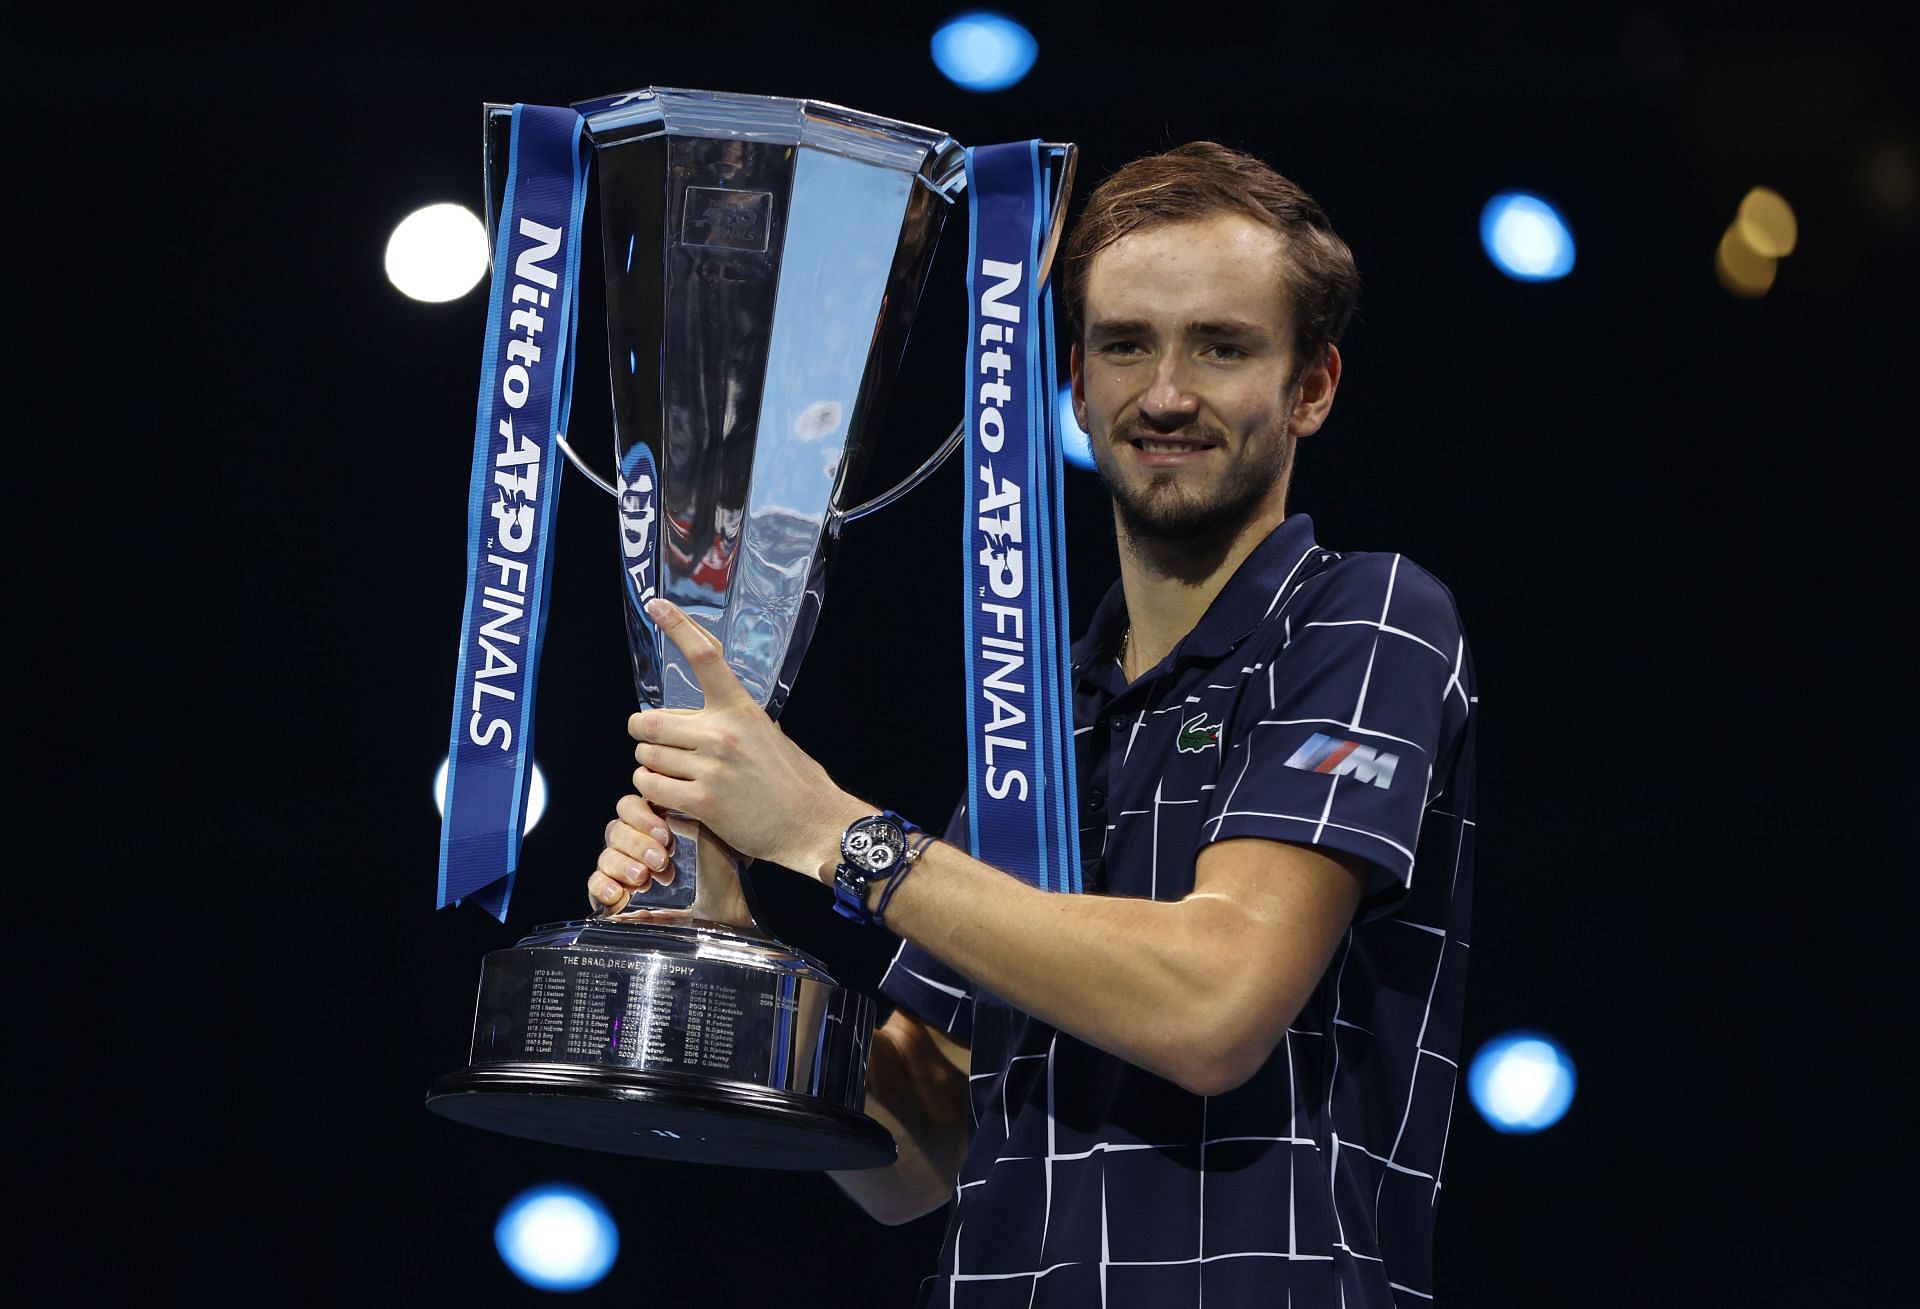 Daniil Medvedev won the 2020 Nitto ATP World Tour Finals